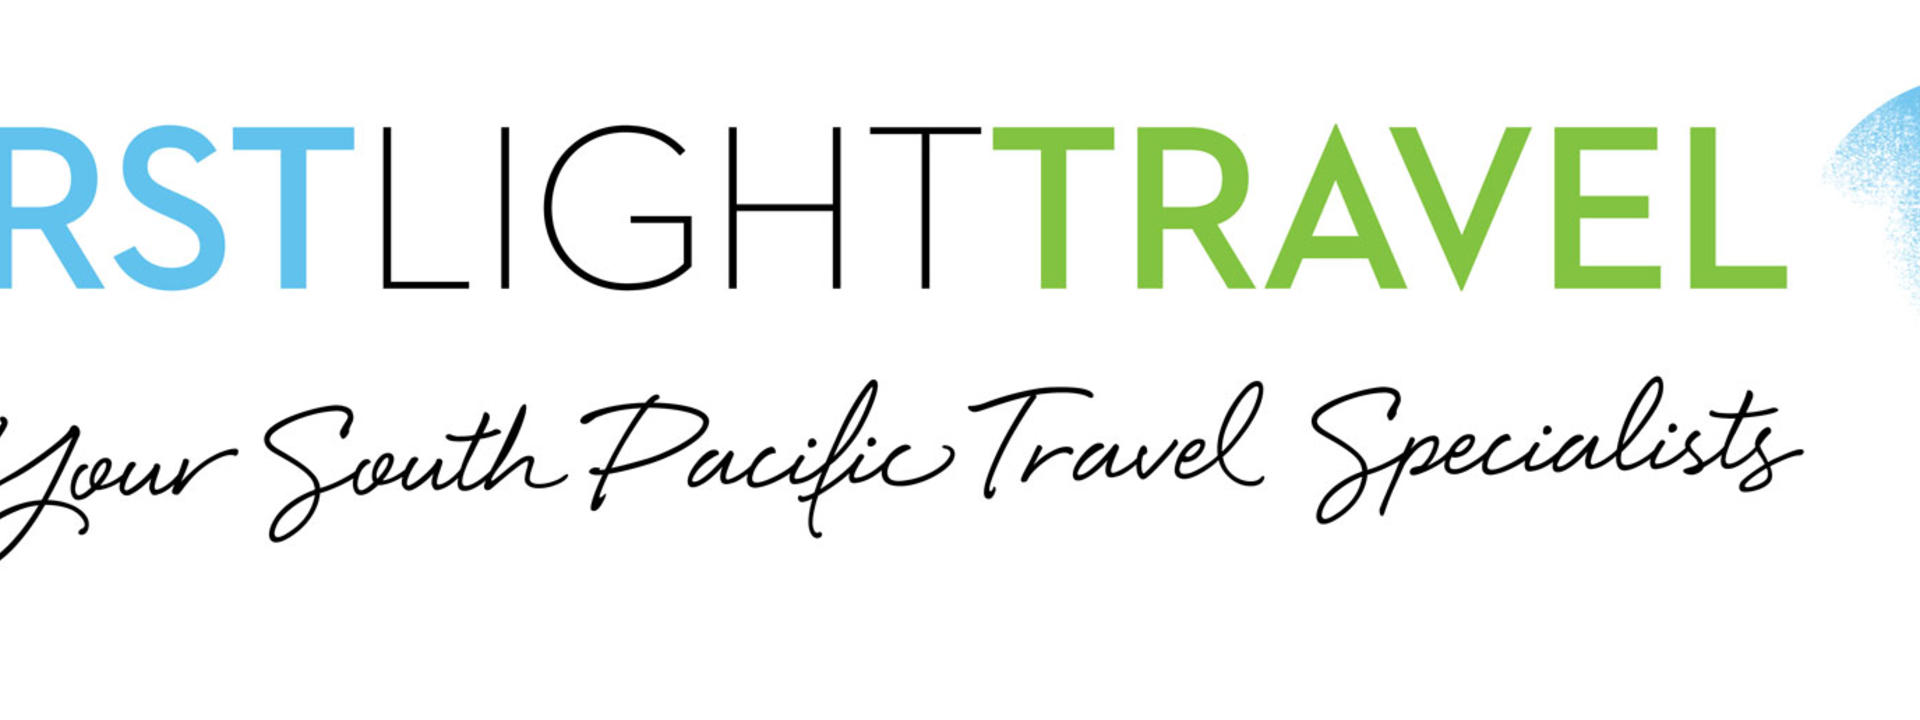 first-light-travel-logo.jpg